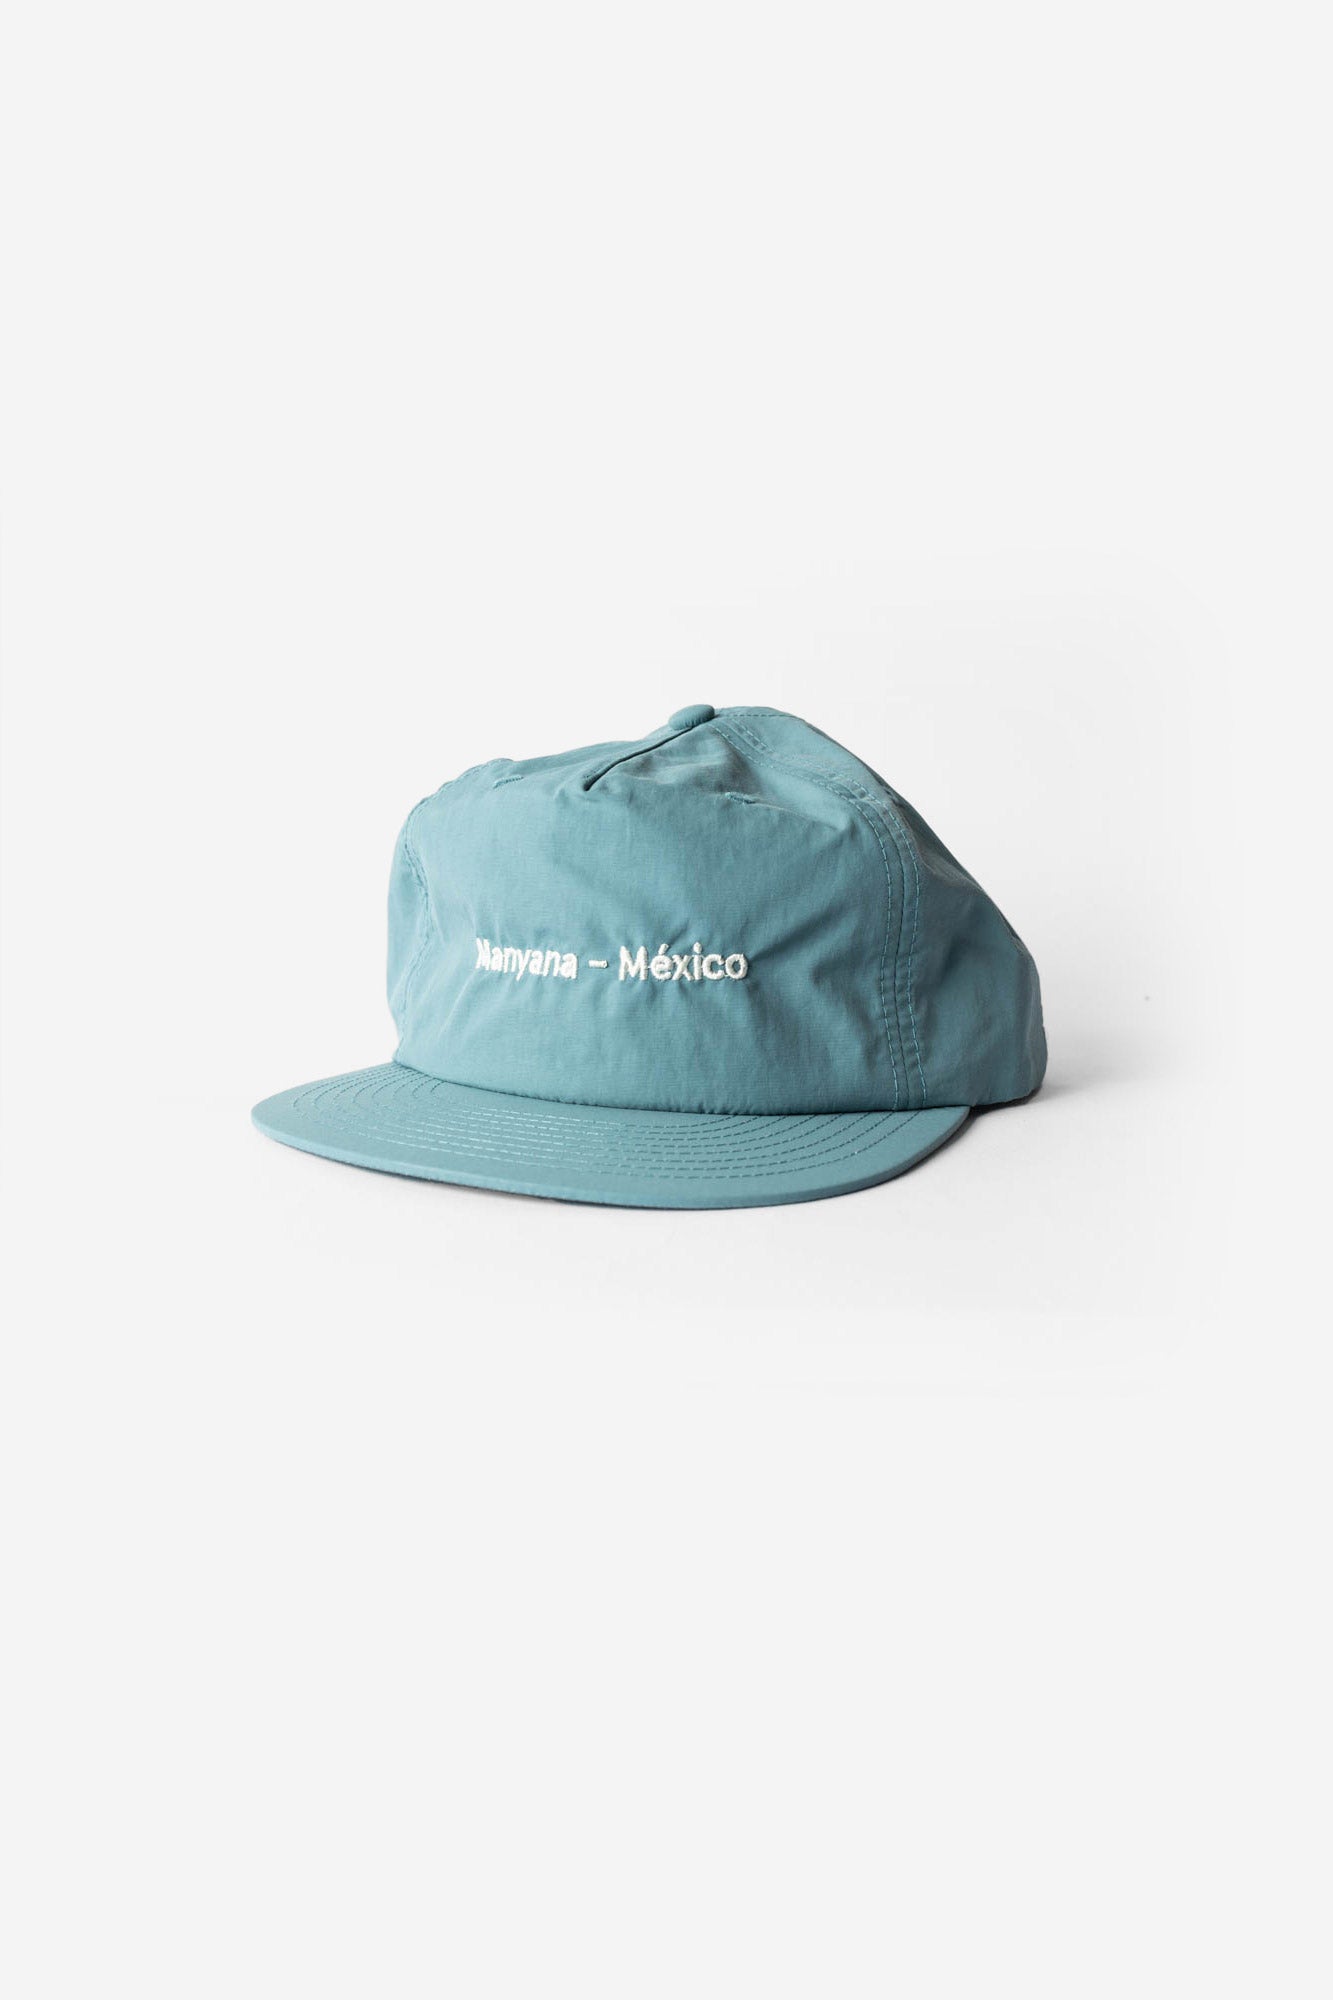 Manyana - México Hat